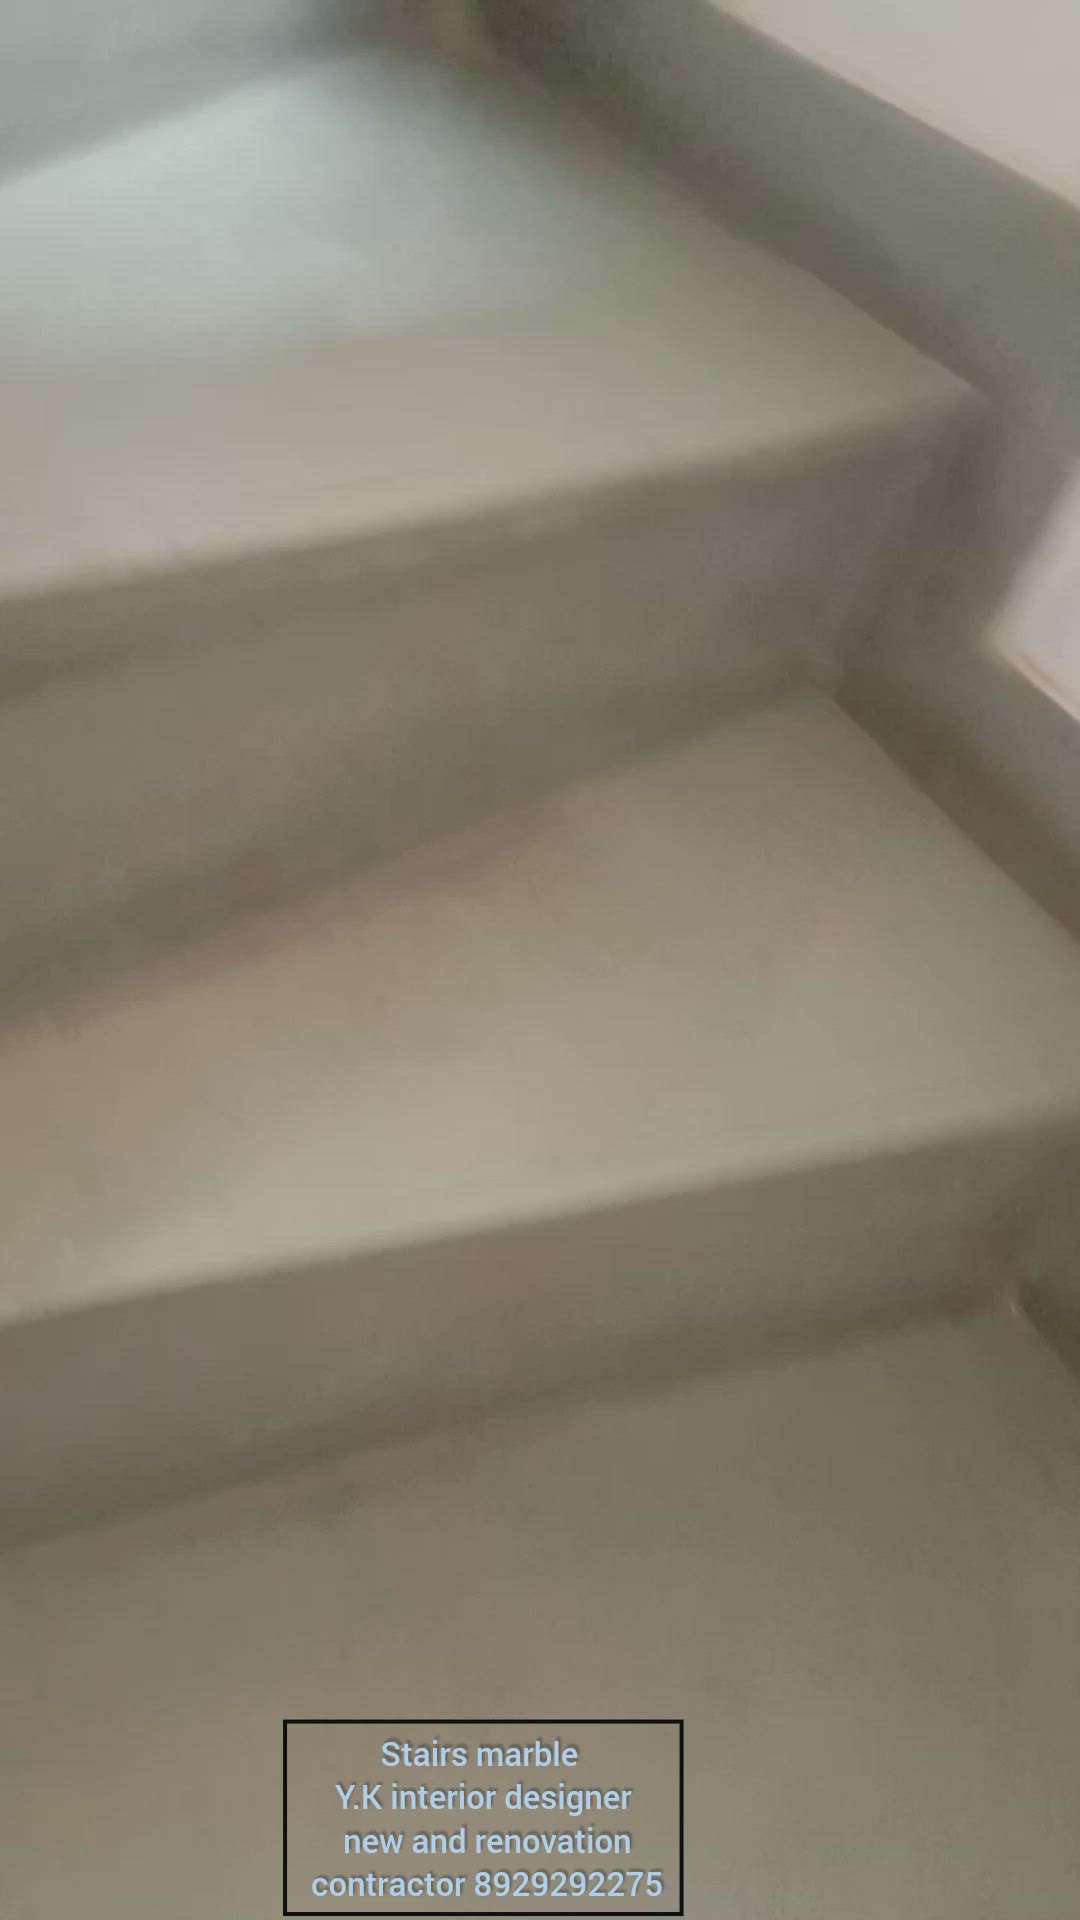 stairs marble work design 
Y.K interior designer new and renovation contractor  #stairsgarden  #stairsrailing  #ykbestintetior  #ykintetiorroom  #yksuperinterior  #ykbestmarble  #ykbuildingrenovation  #modular  #HouseRenovation  #KitchenRenovation  #BathroomRenovation  #RectangularDiningTable  #MasterBedroom  #HouseDesigns  #4DoorWardrobe  #FlooringTiles  #GraniteFloors